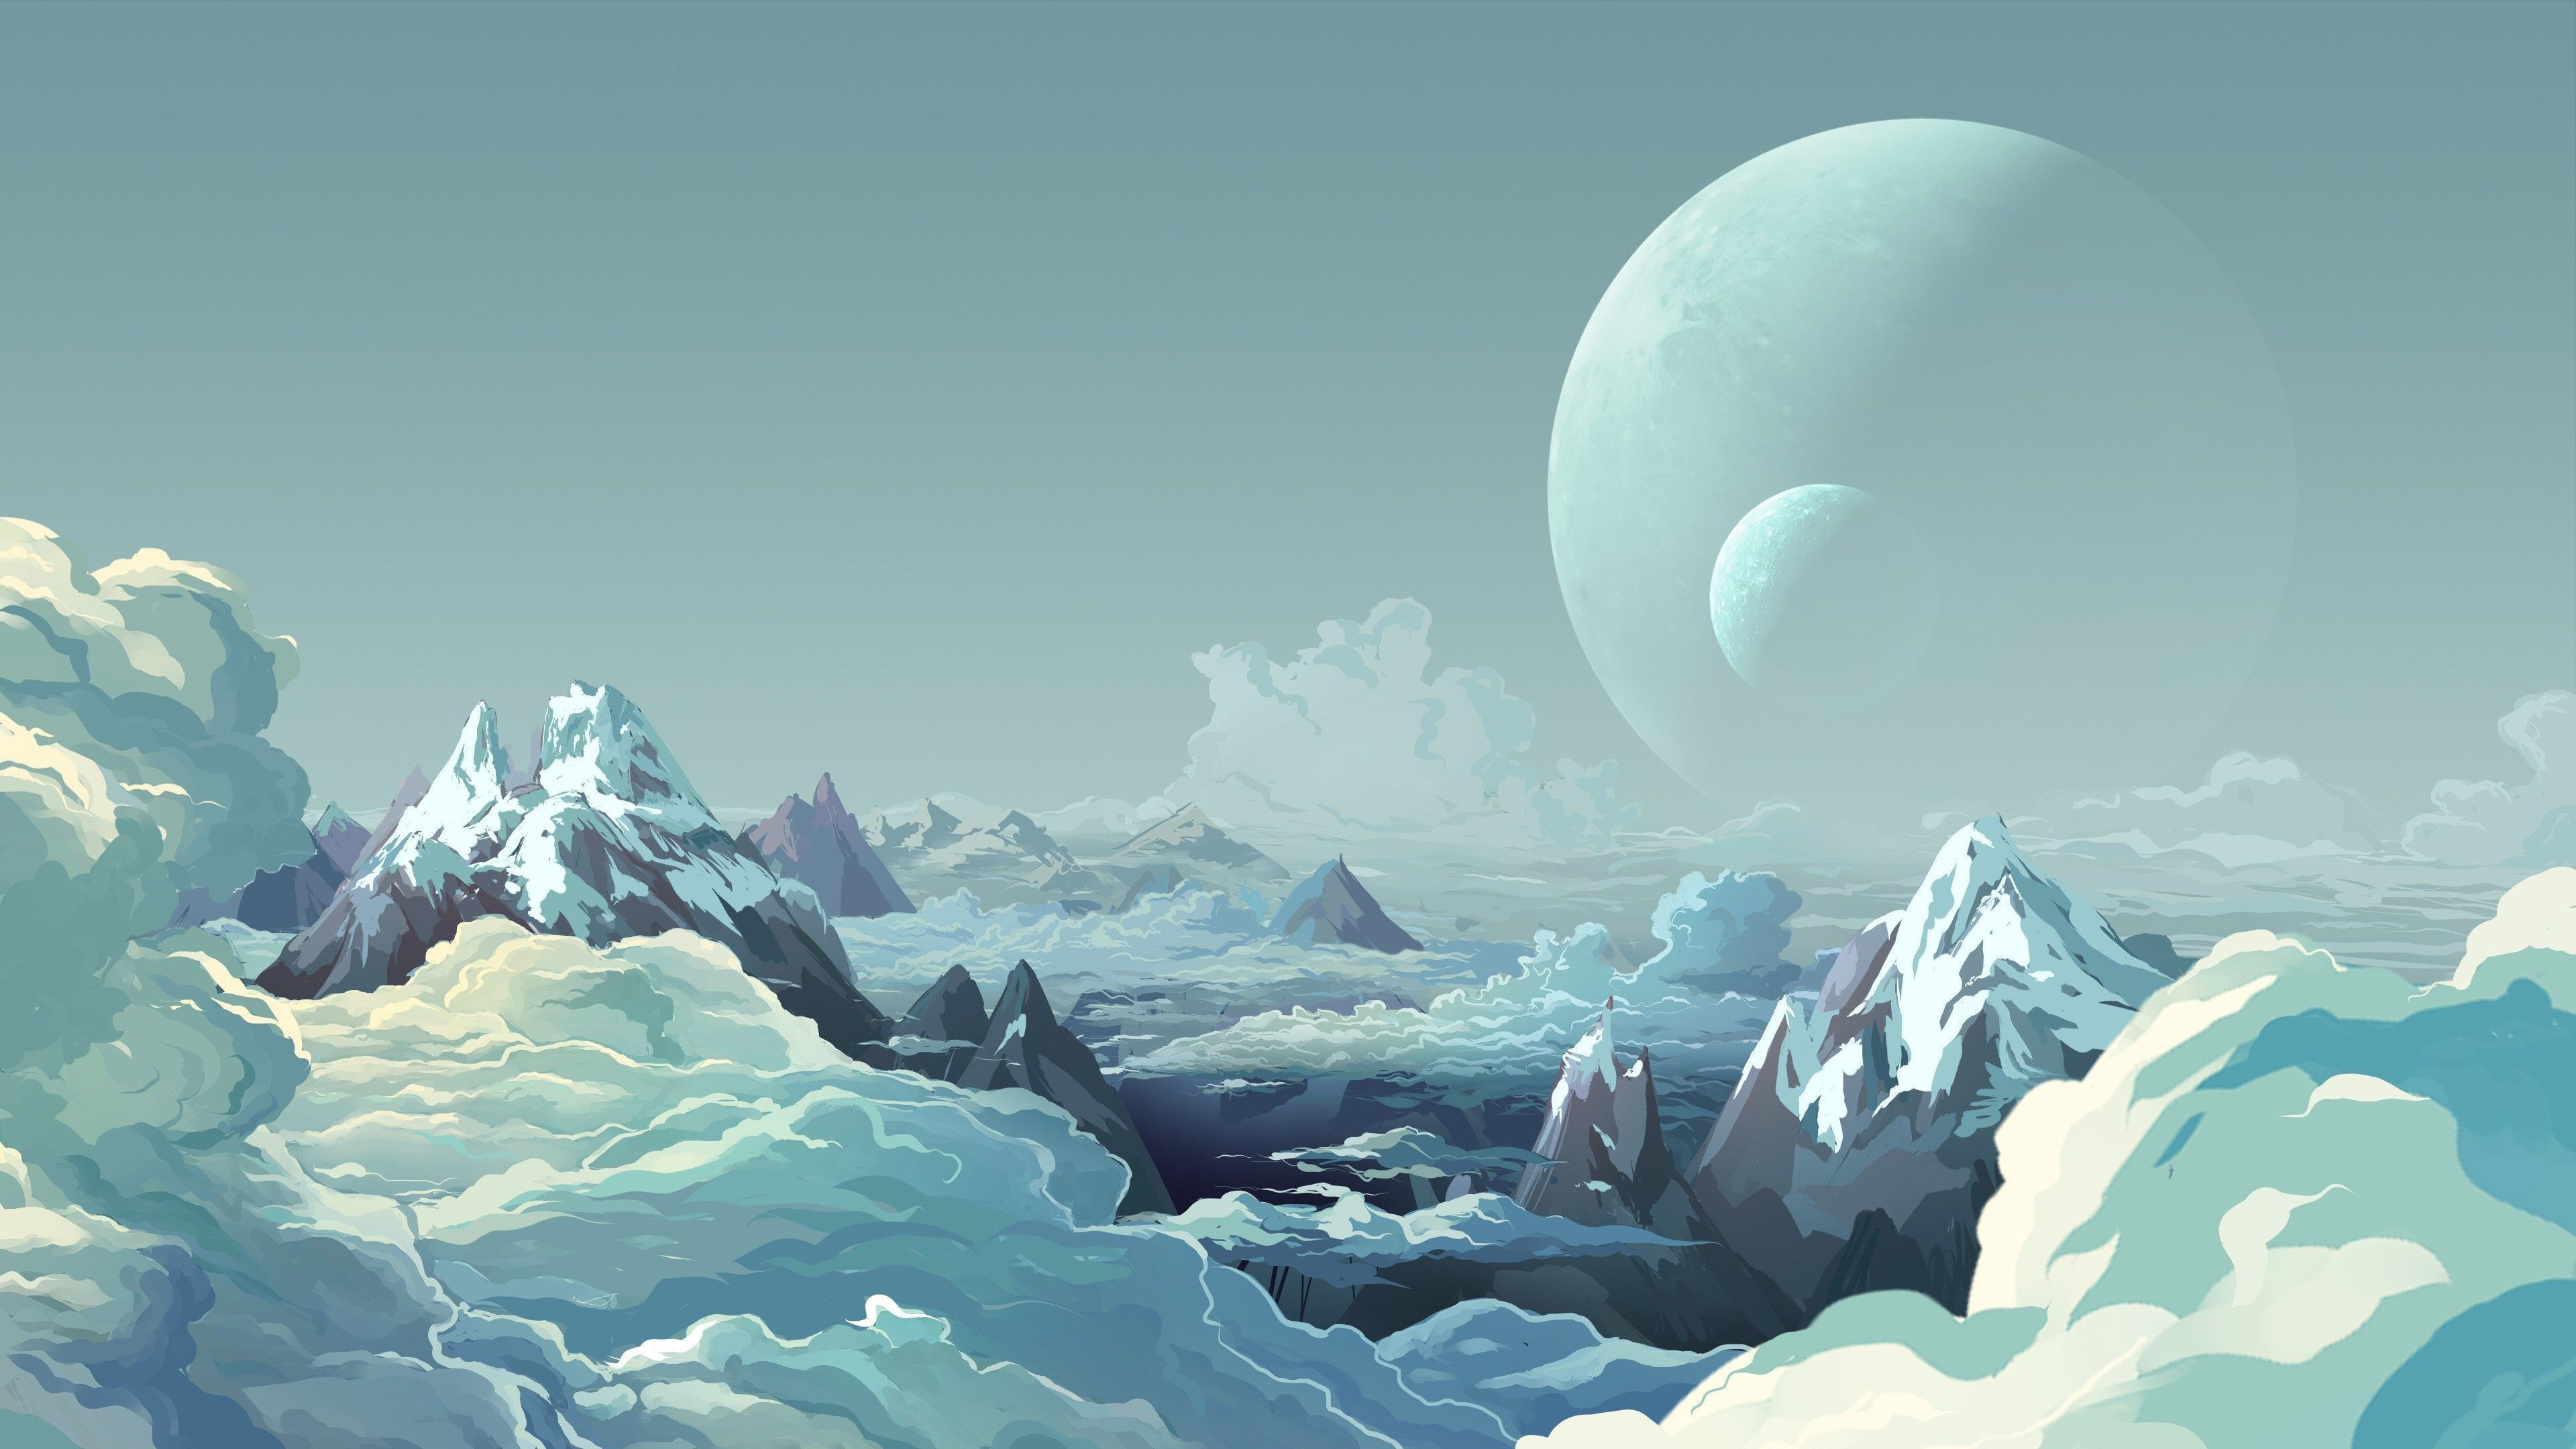 Fondos de pantalla Illustration snowy mountains clouds